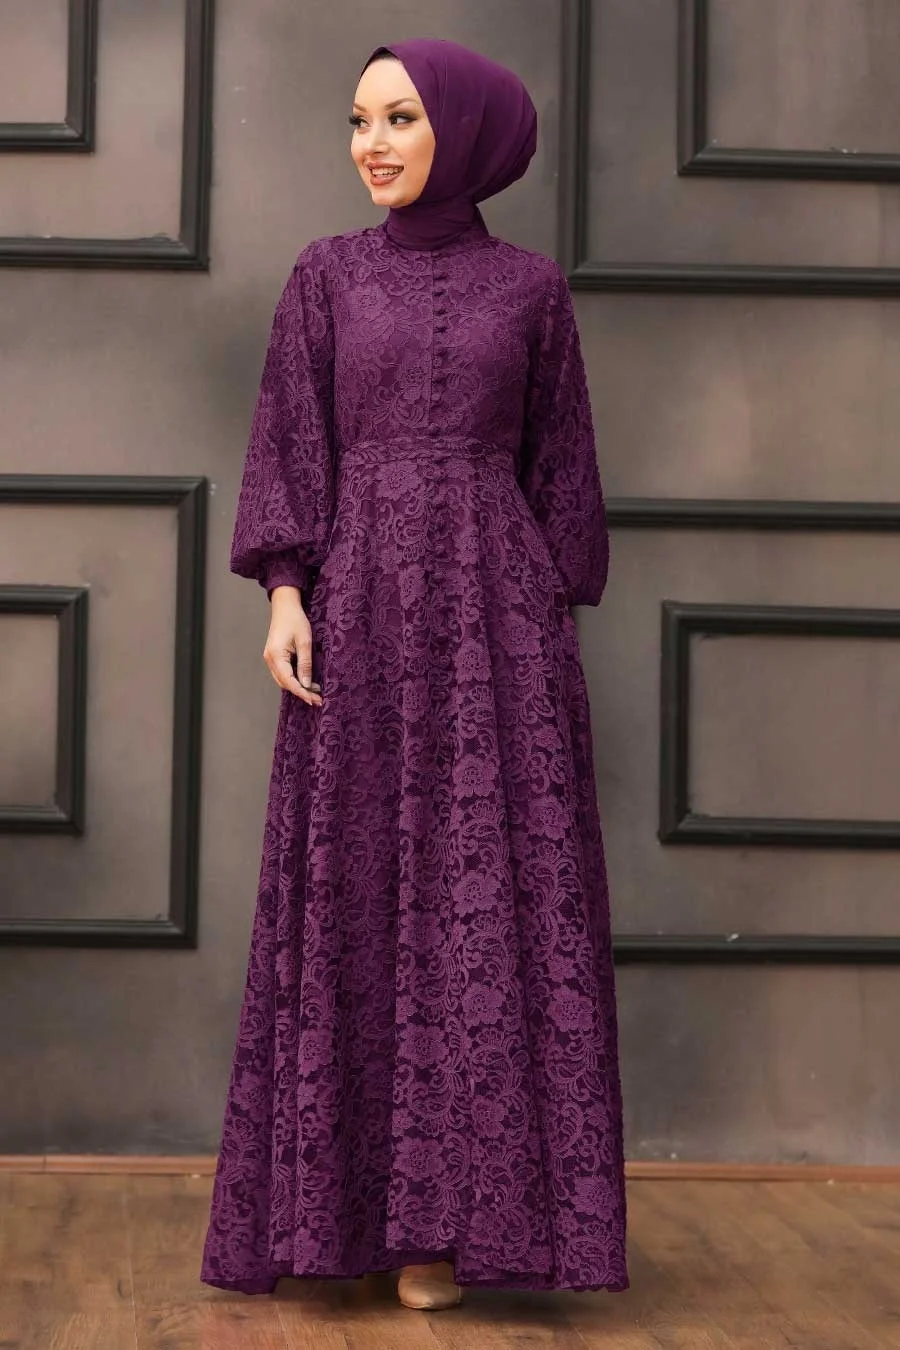 Women's evening dress lace embroidered lined elegant tasarım hijab evening dress Muslim fashion Islamic clothing women clothing fashion